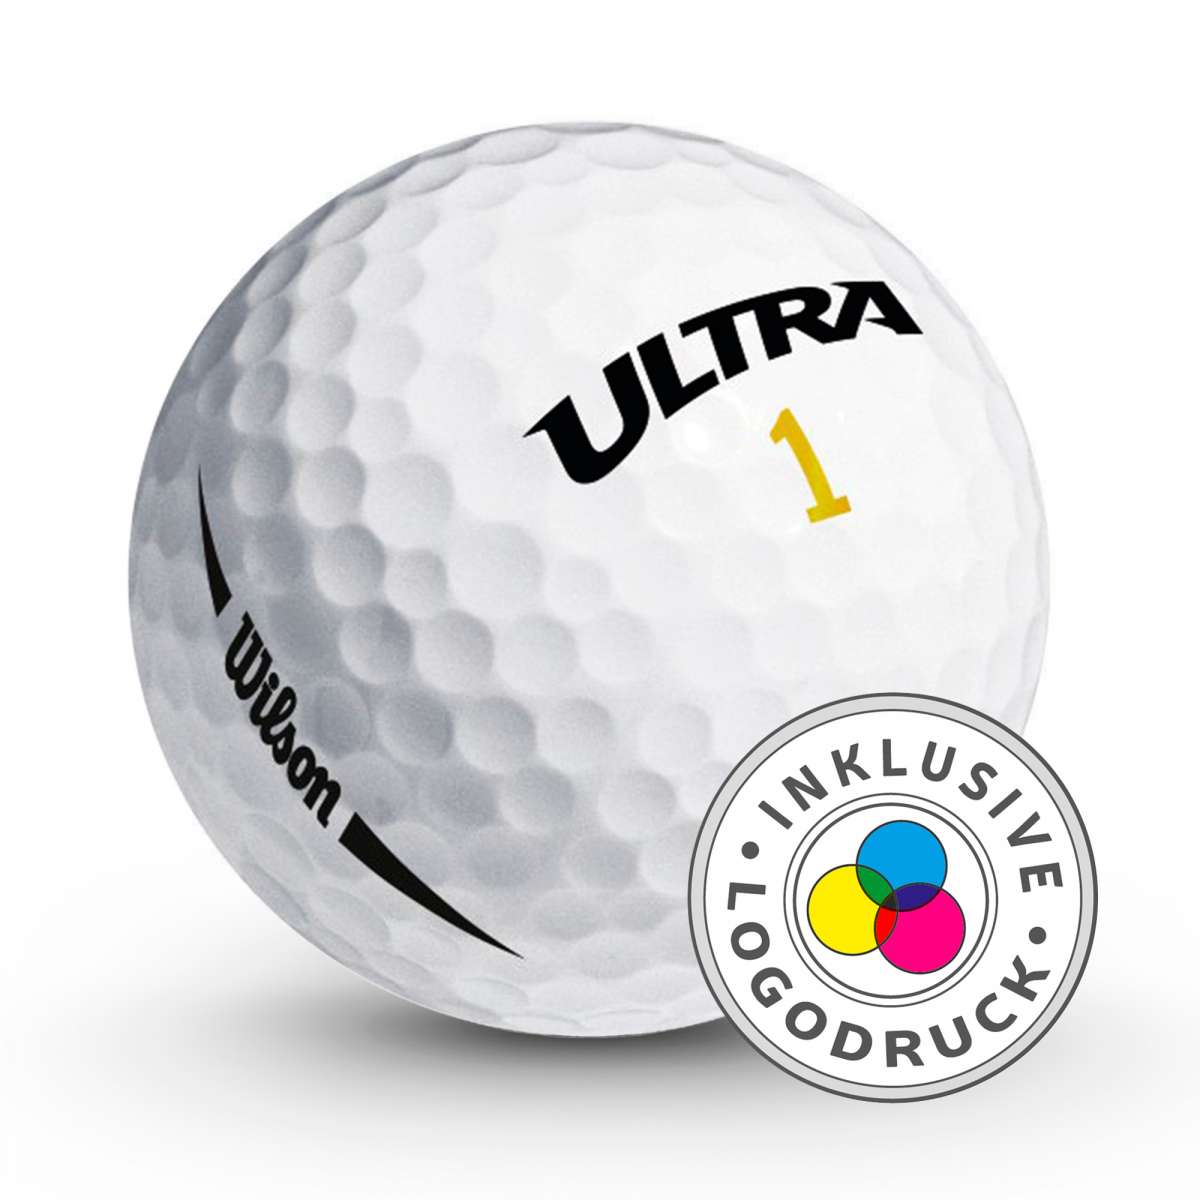 Wilson Ultra Ultimate Distance Logobälle (Golfbälle) günstig kaufen bei Golflaedchen.de